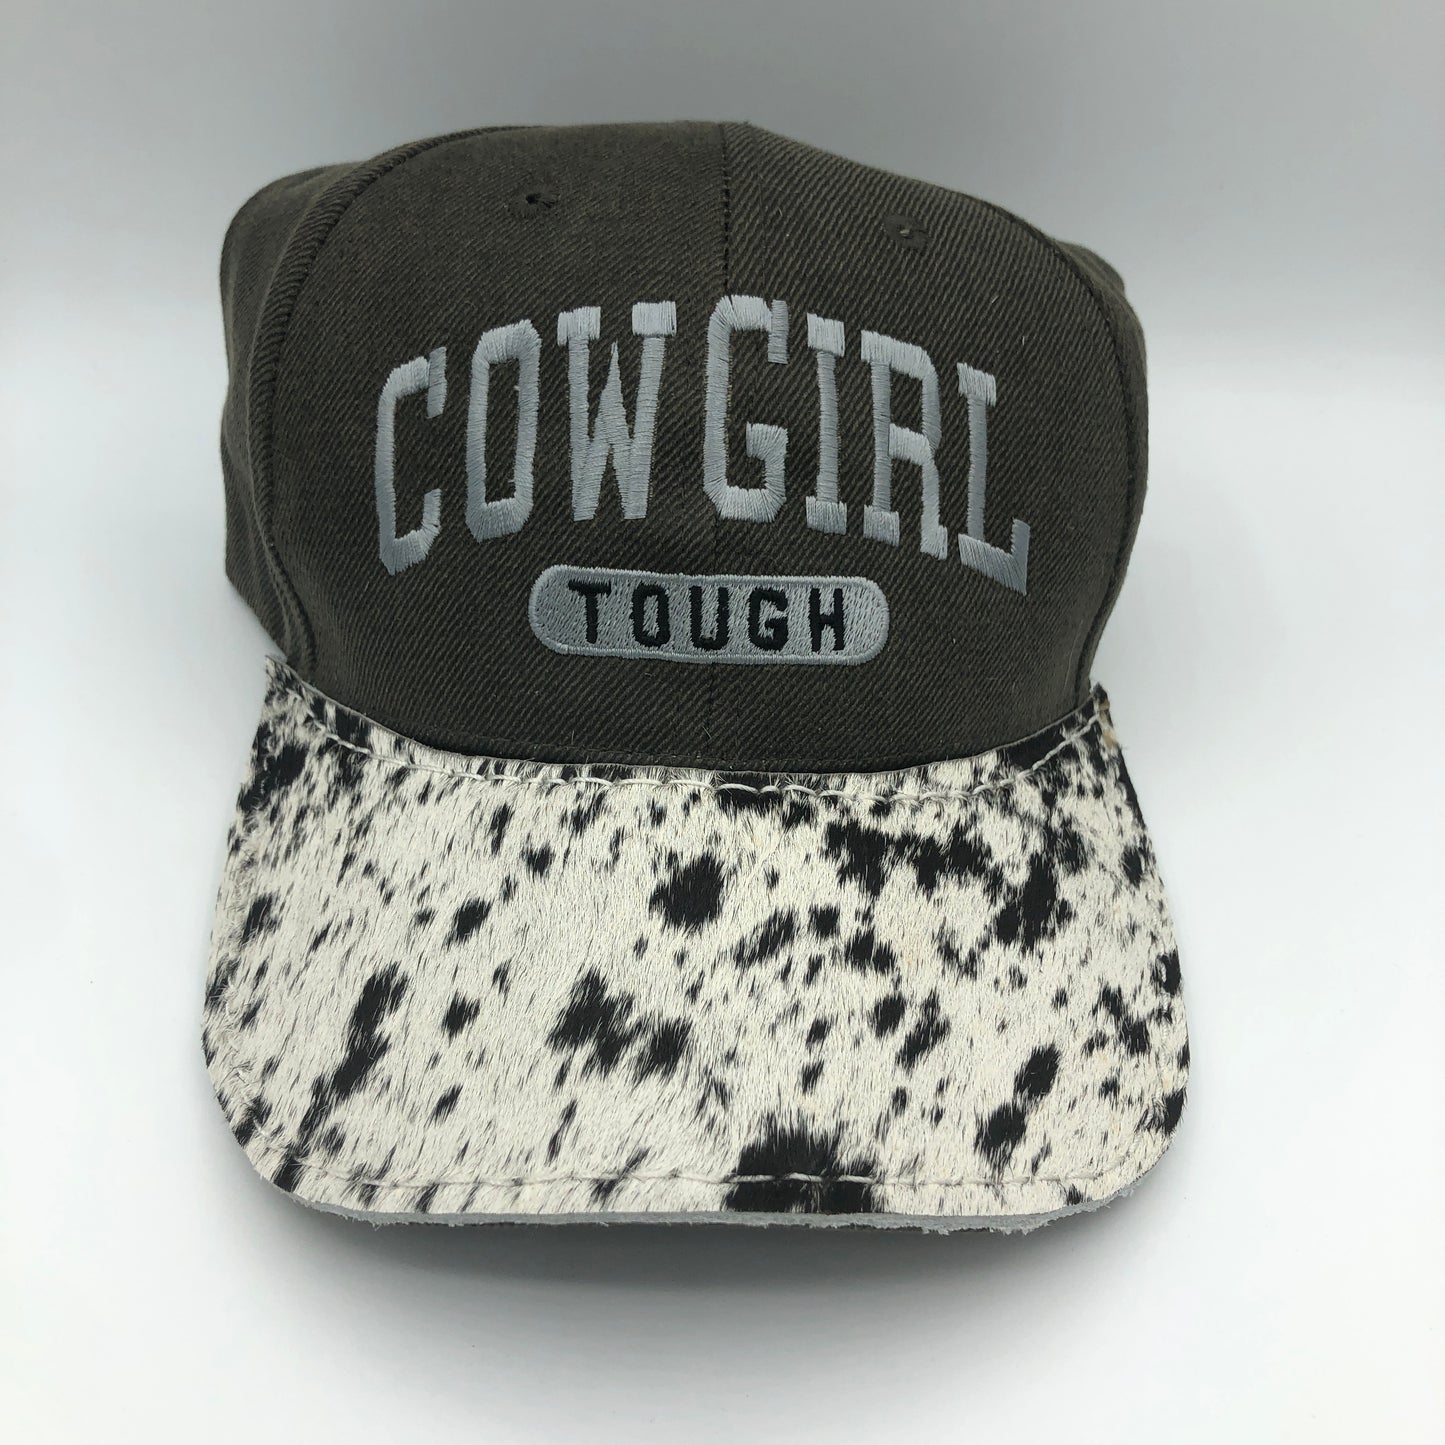 COWGIRL TOUGH COWHIDE BALL CAP COLLECTION